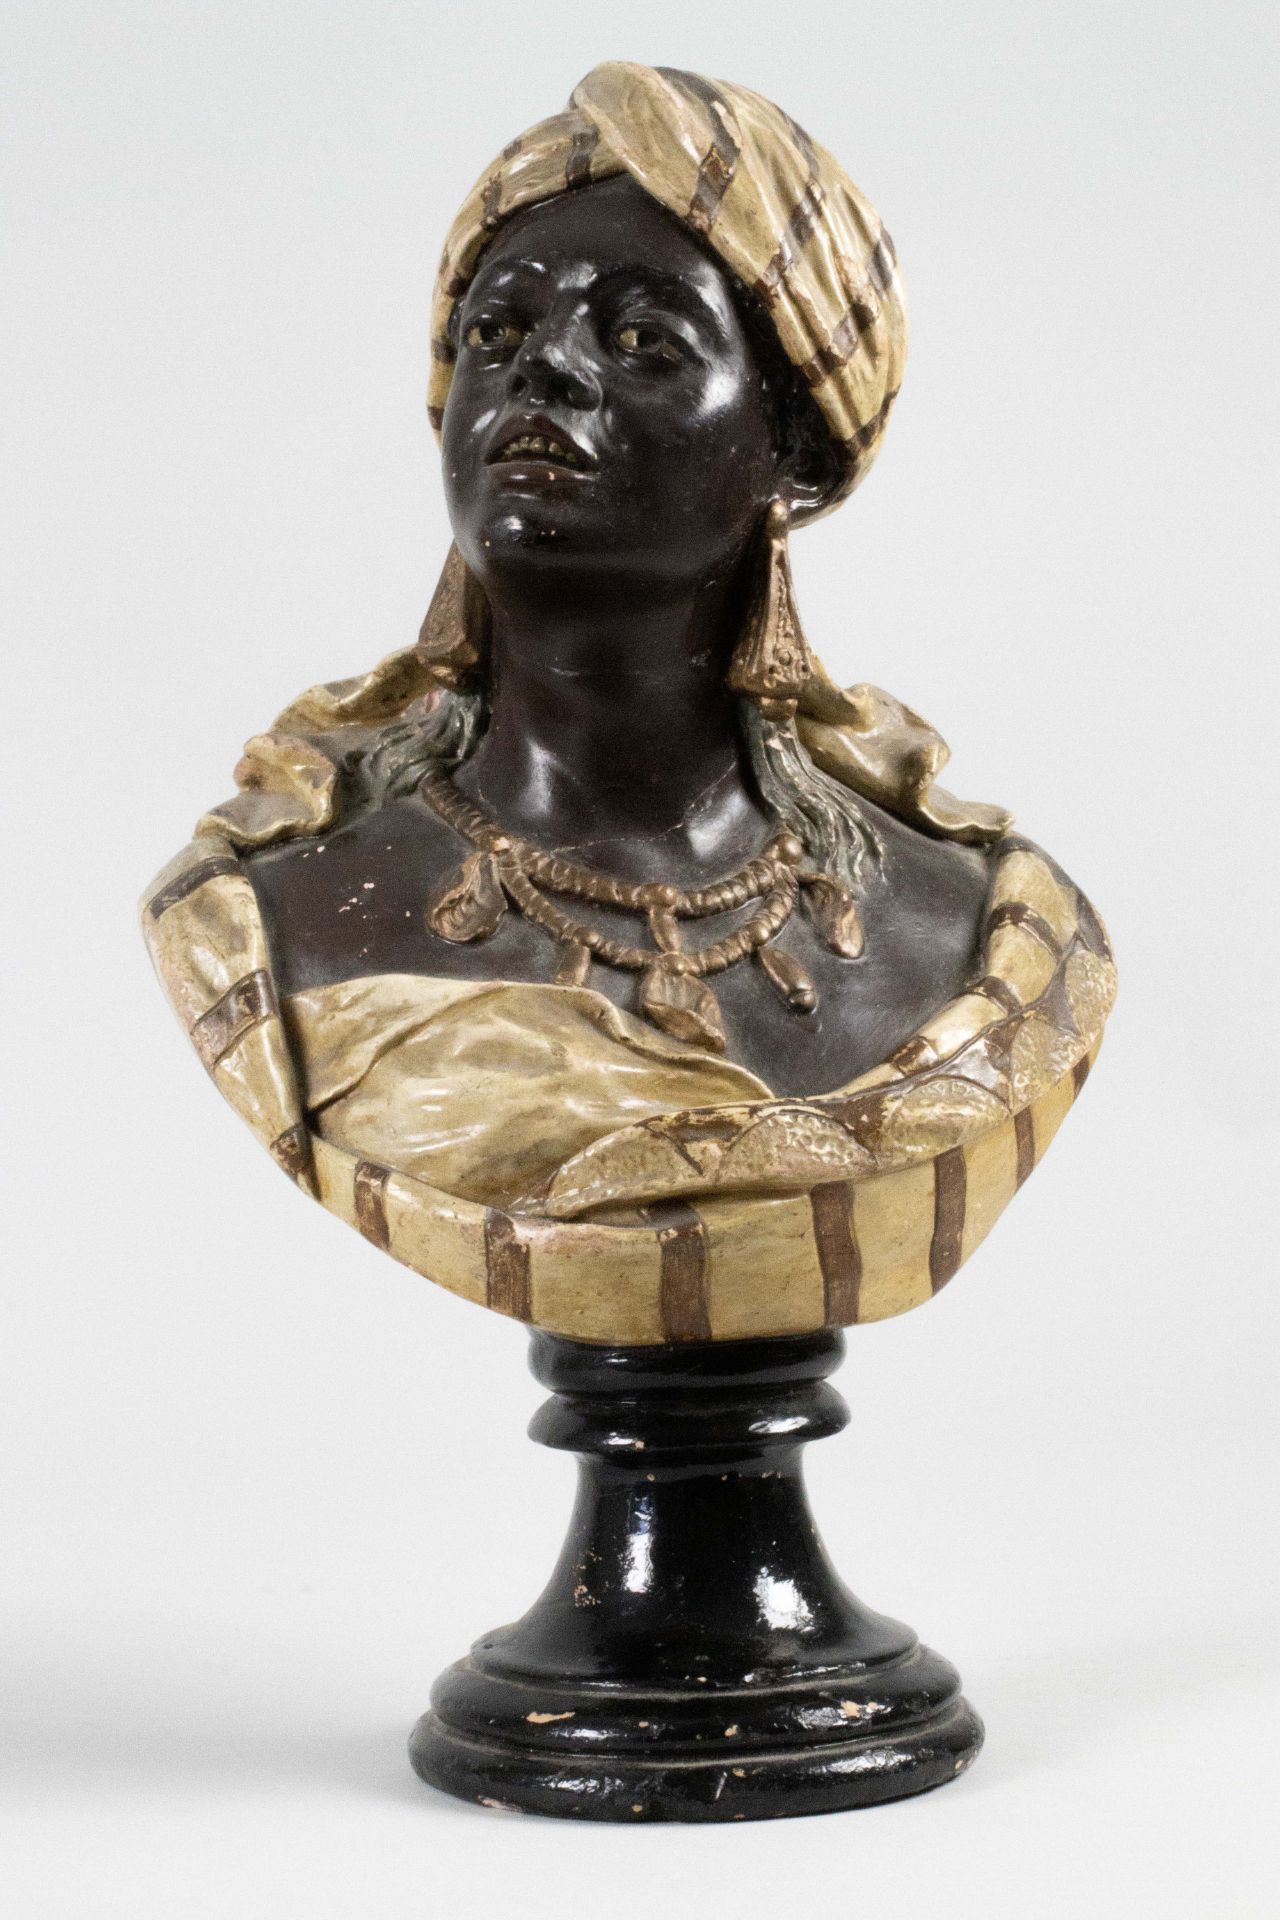 Keramikbüste 'Orientalin' / A ceramic bust of an 'Oriental lady', 1920er Jahre